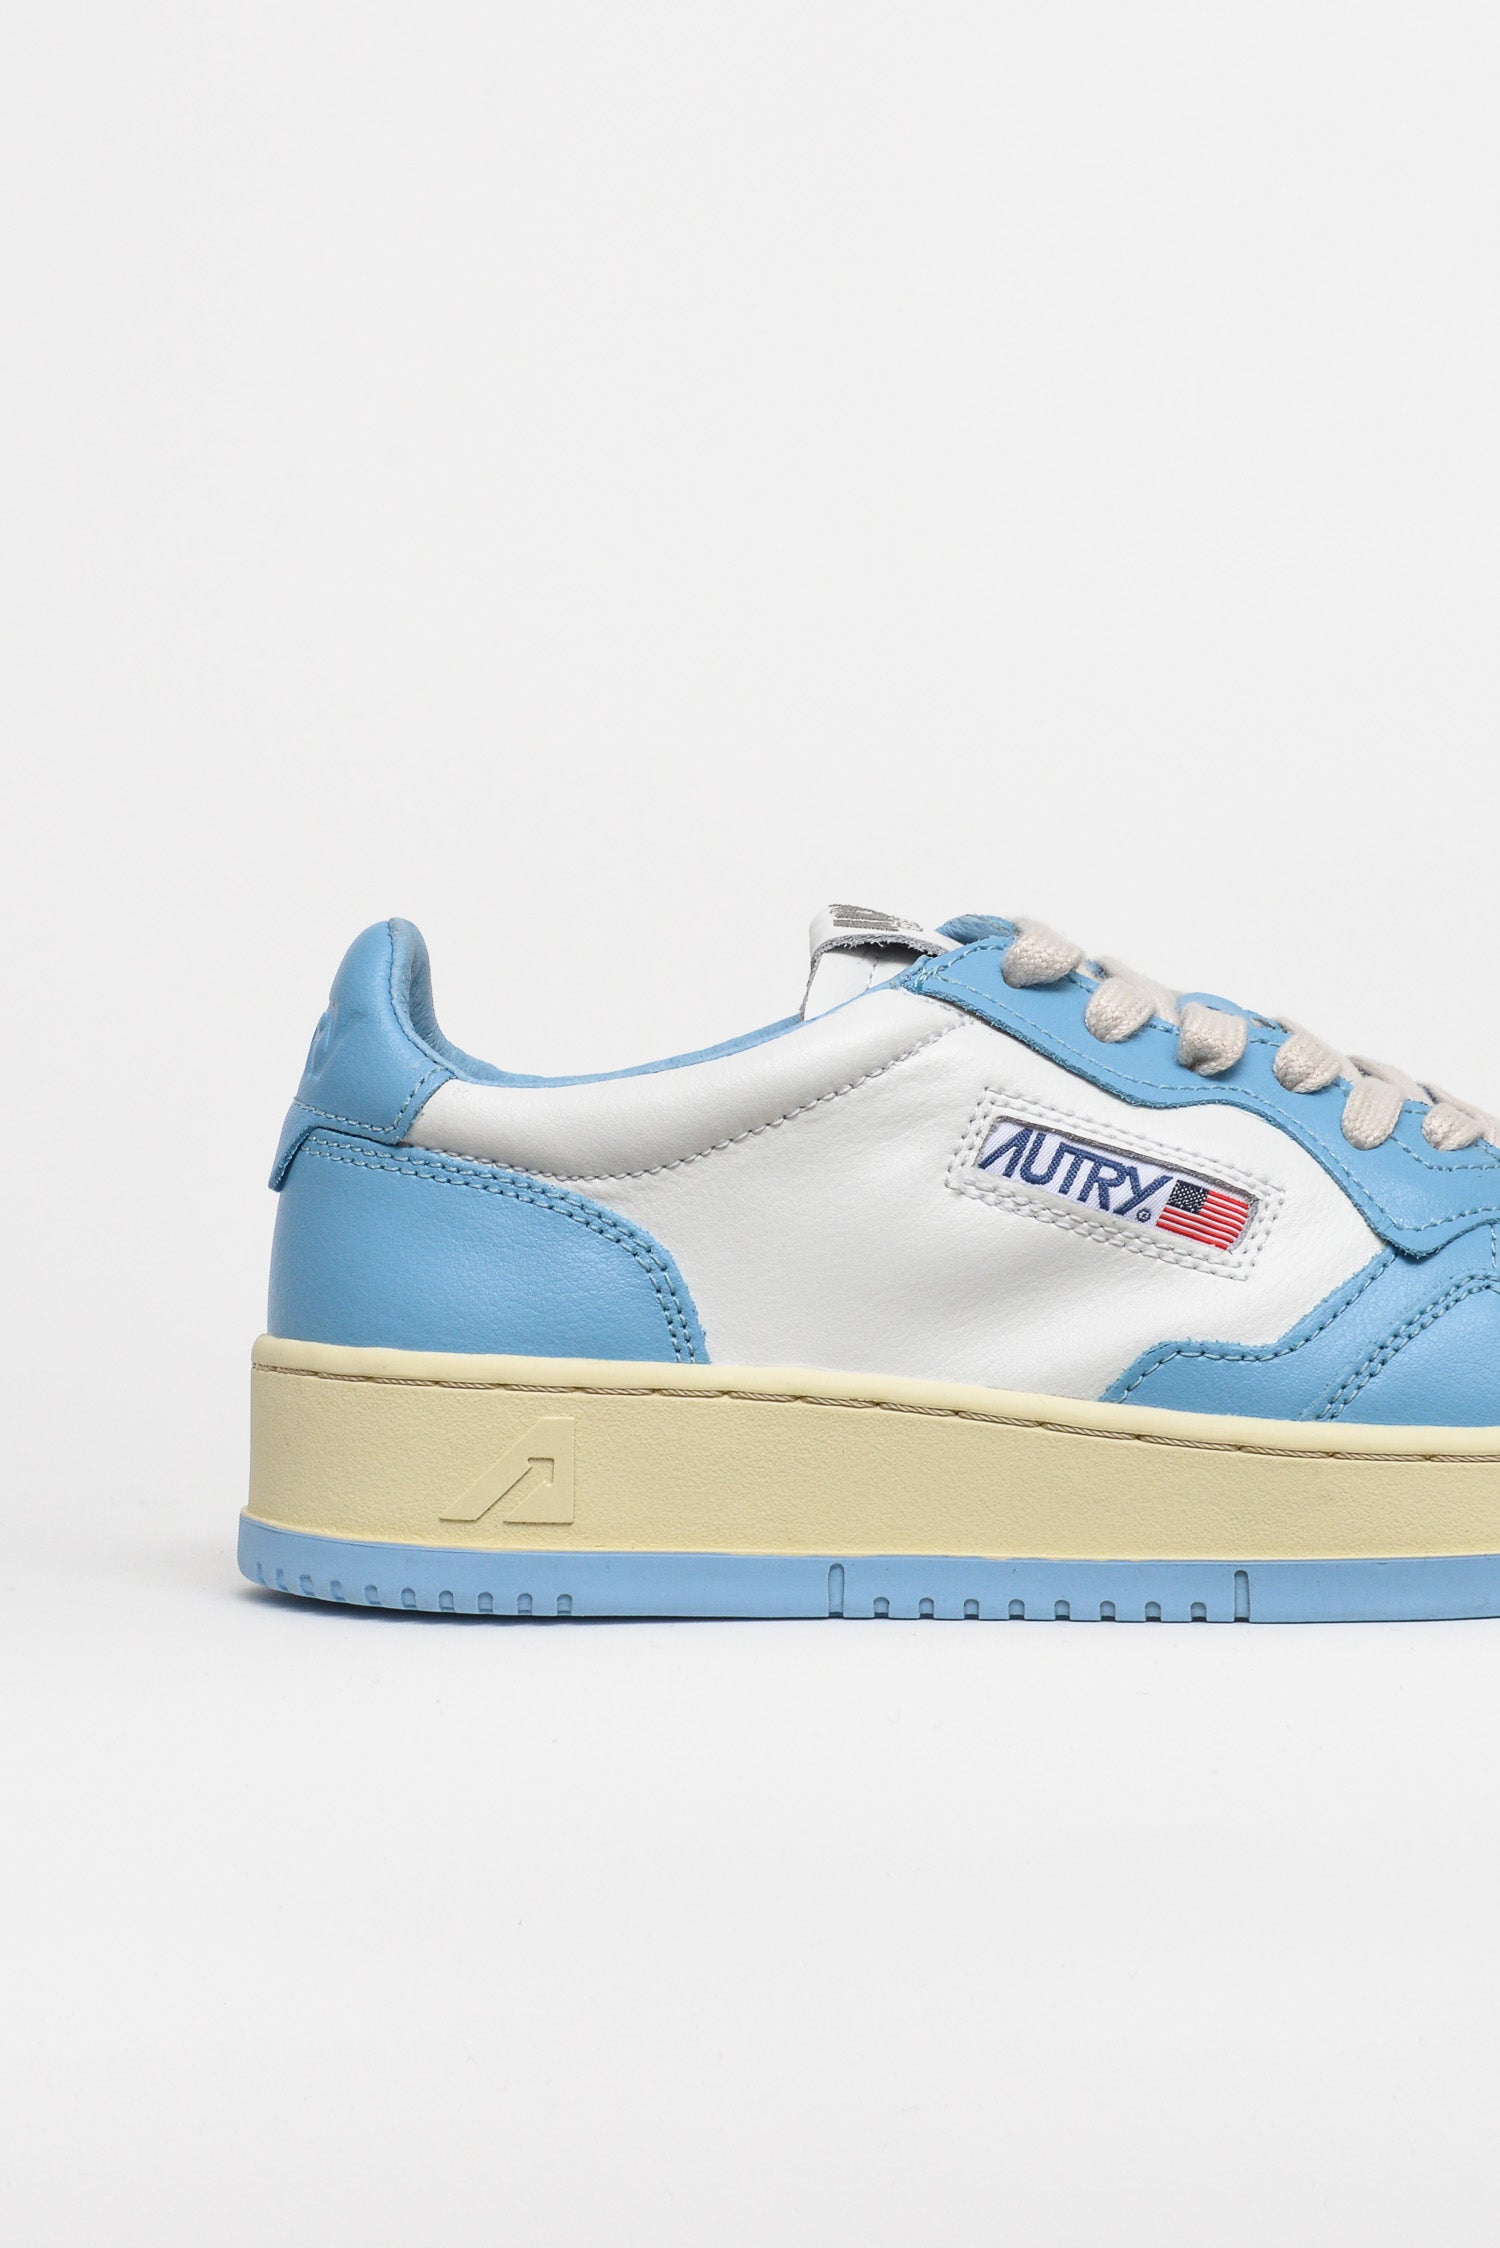  Autry Sneaker Azzurro Bianco Uomo - 5